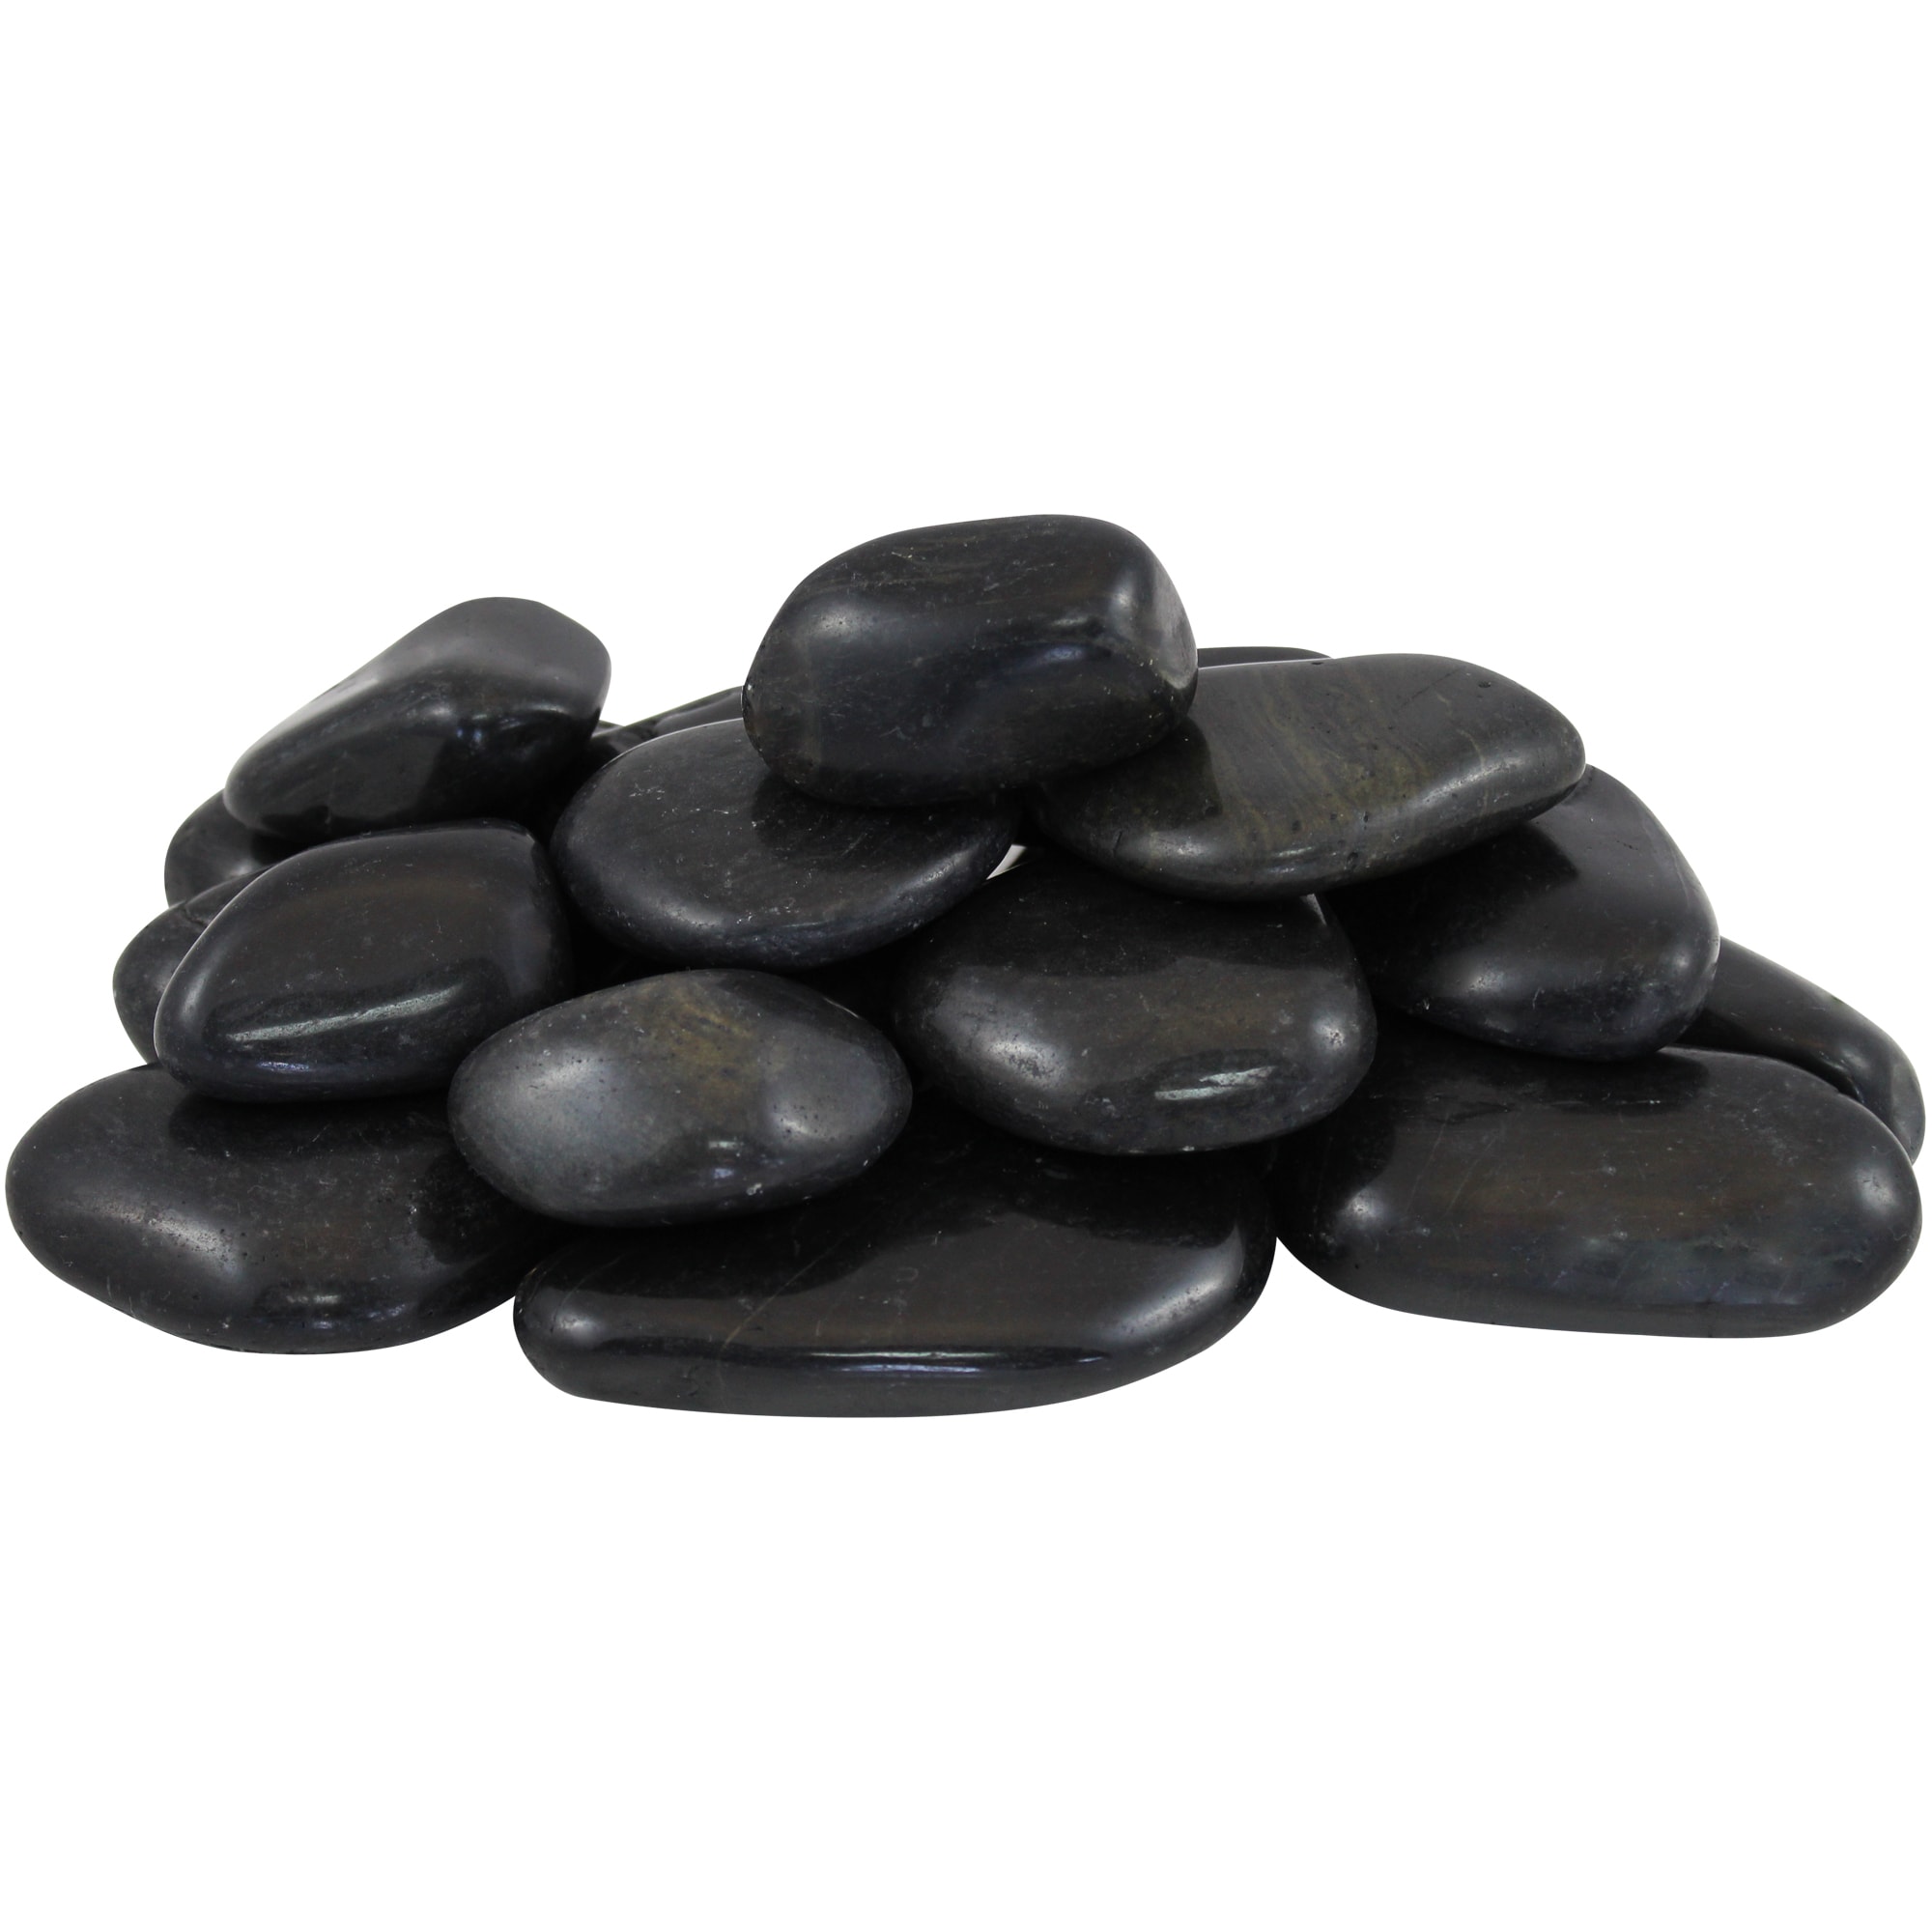 Black River Rocks Large for Landscaping Outdoor Polished Black Pebbles for  Plants Garden Decorative Stones 15 Pound Black River Rock Stones, 1 to 2